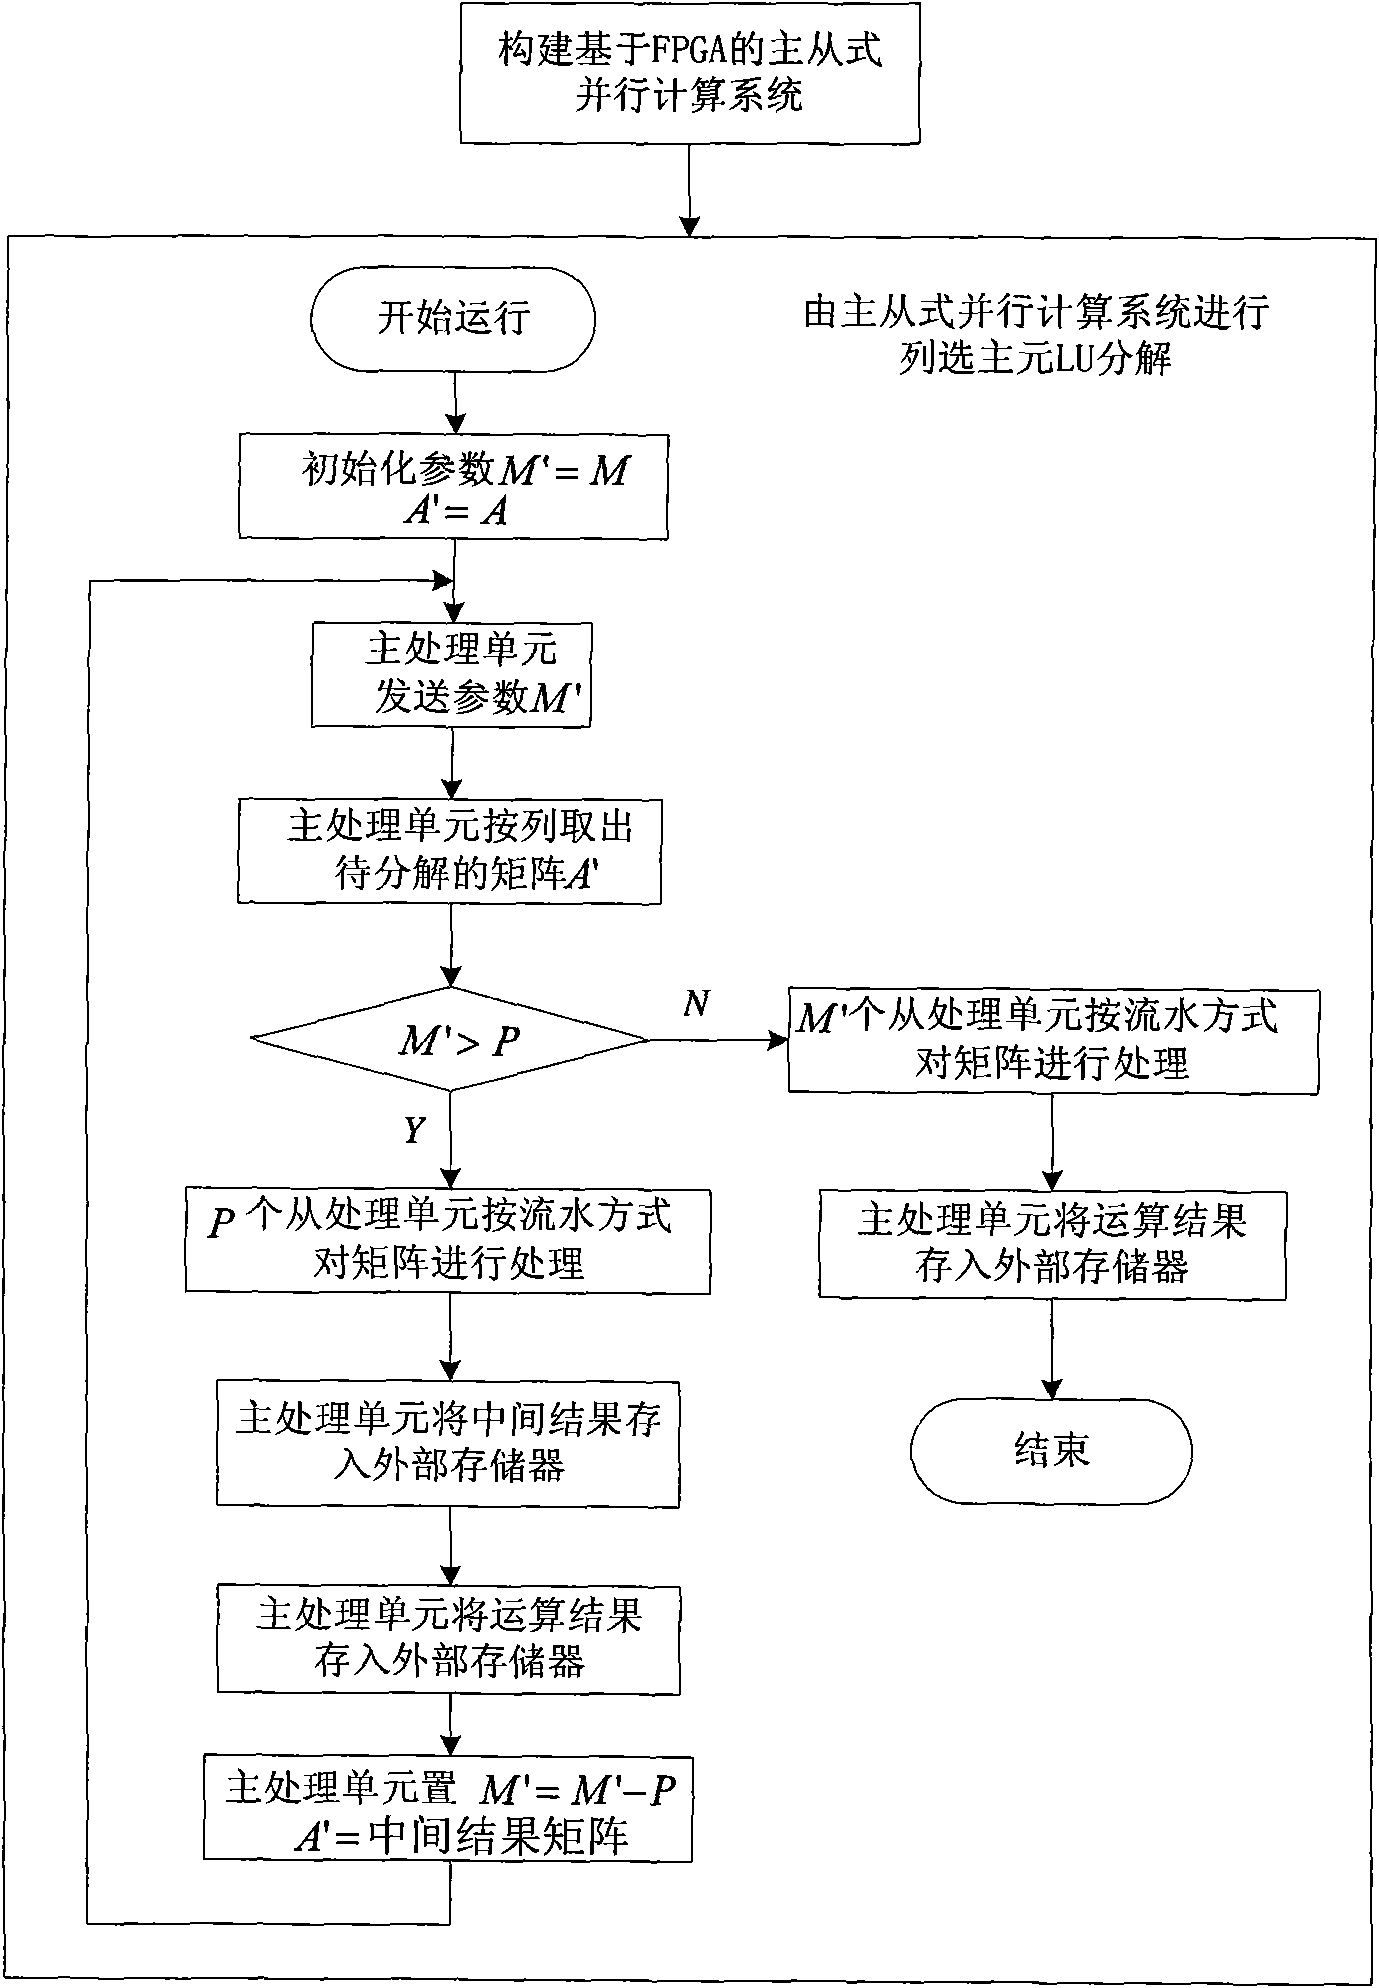 Method of column pivoting LU decomposition based on FPGA